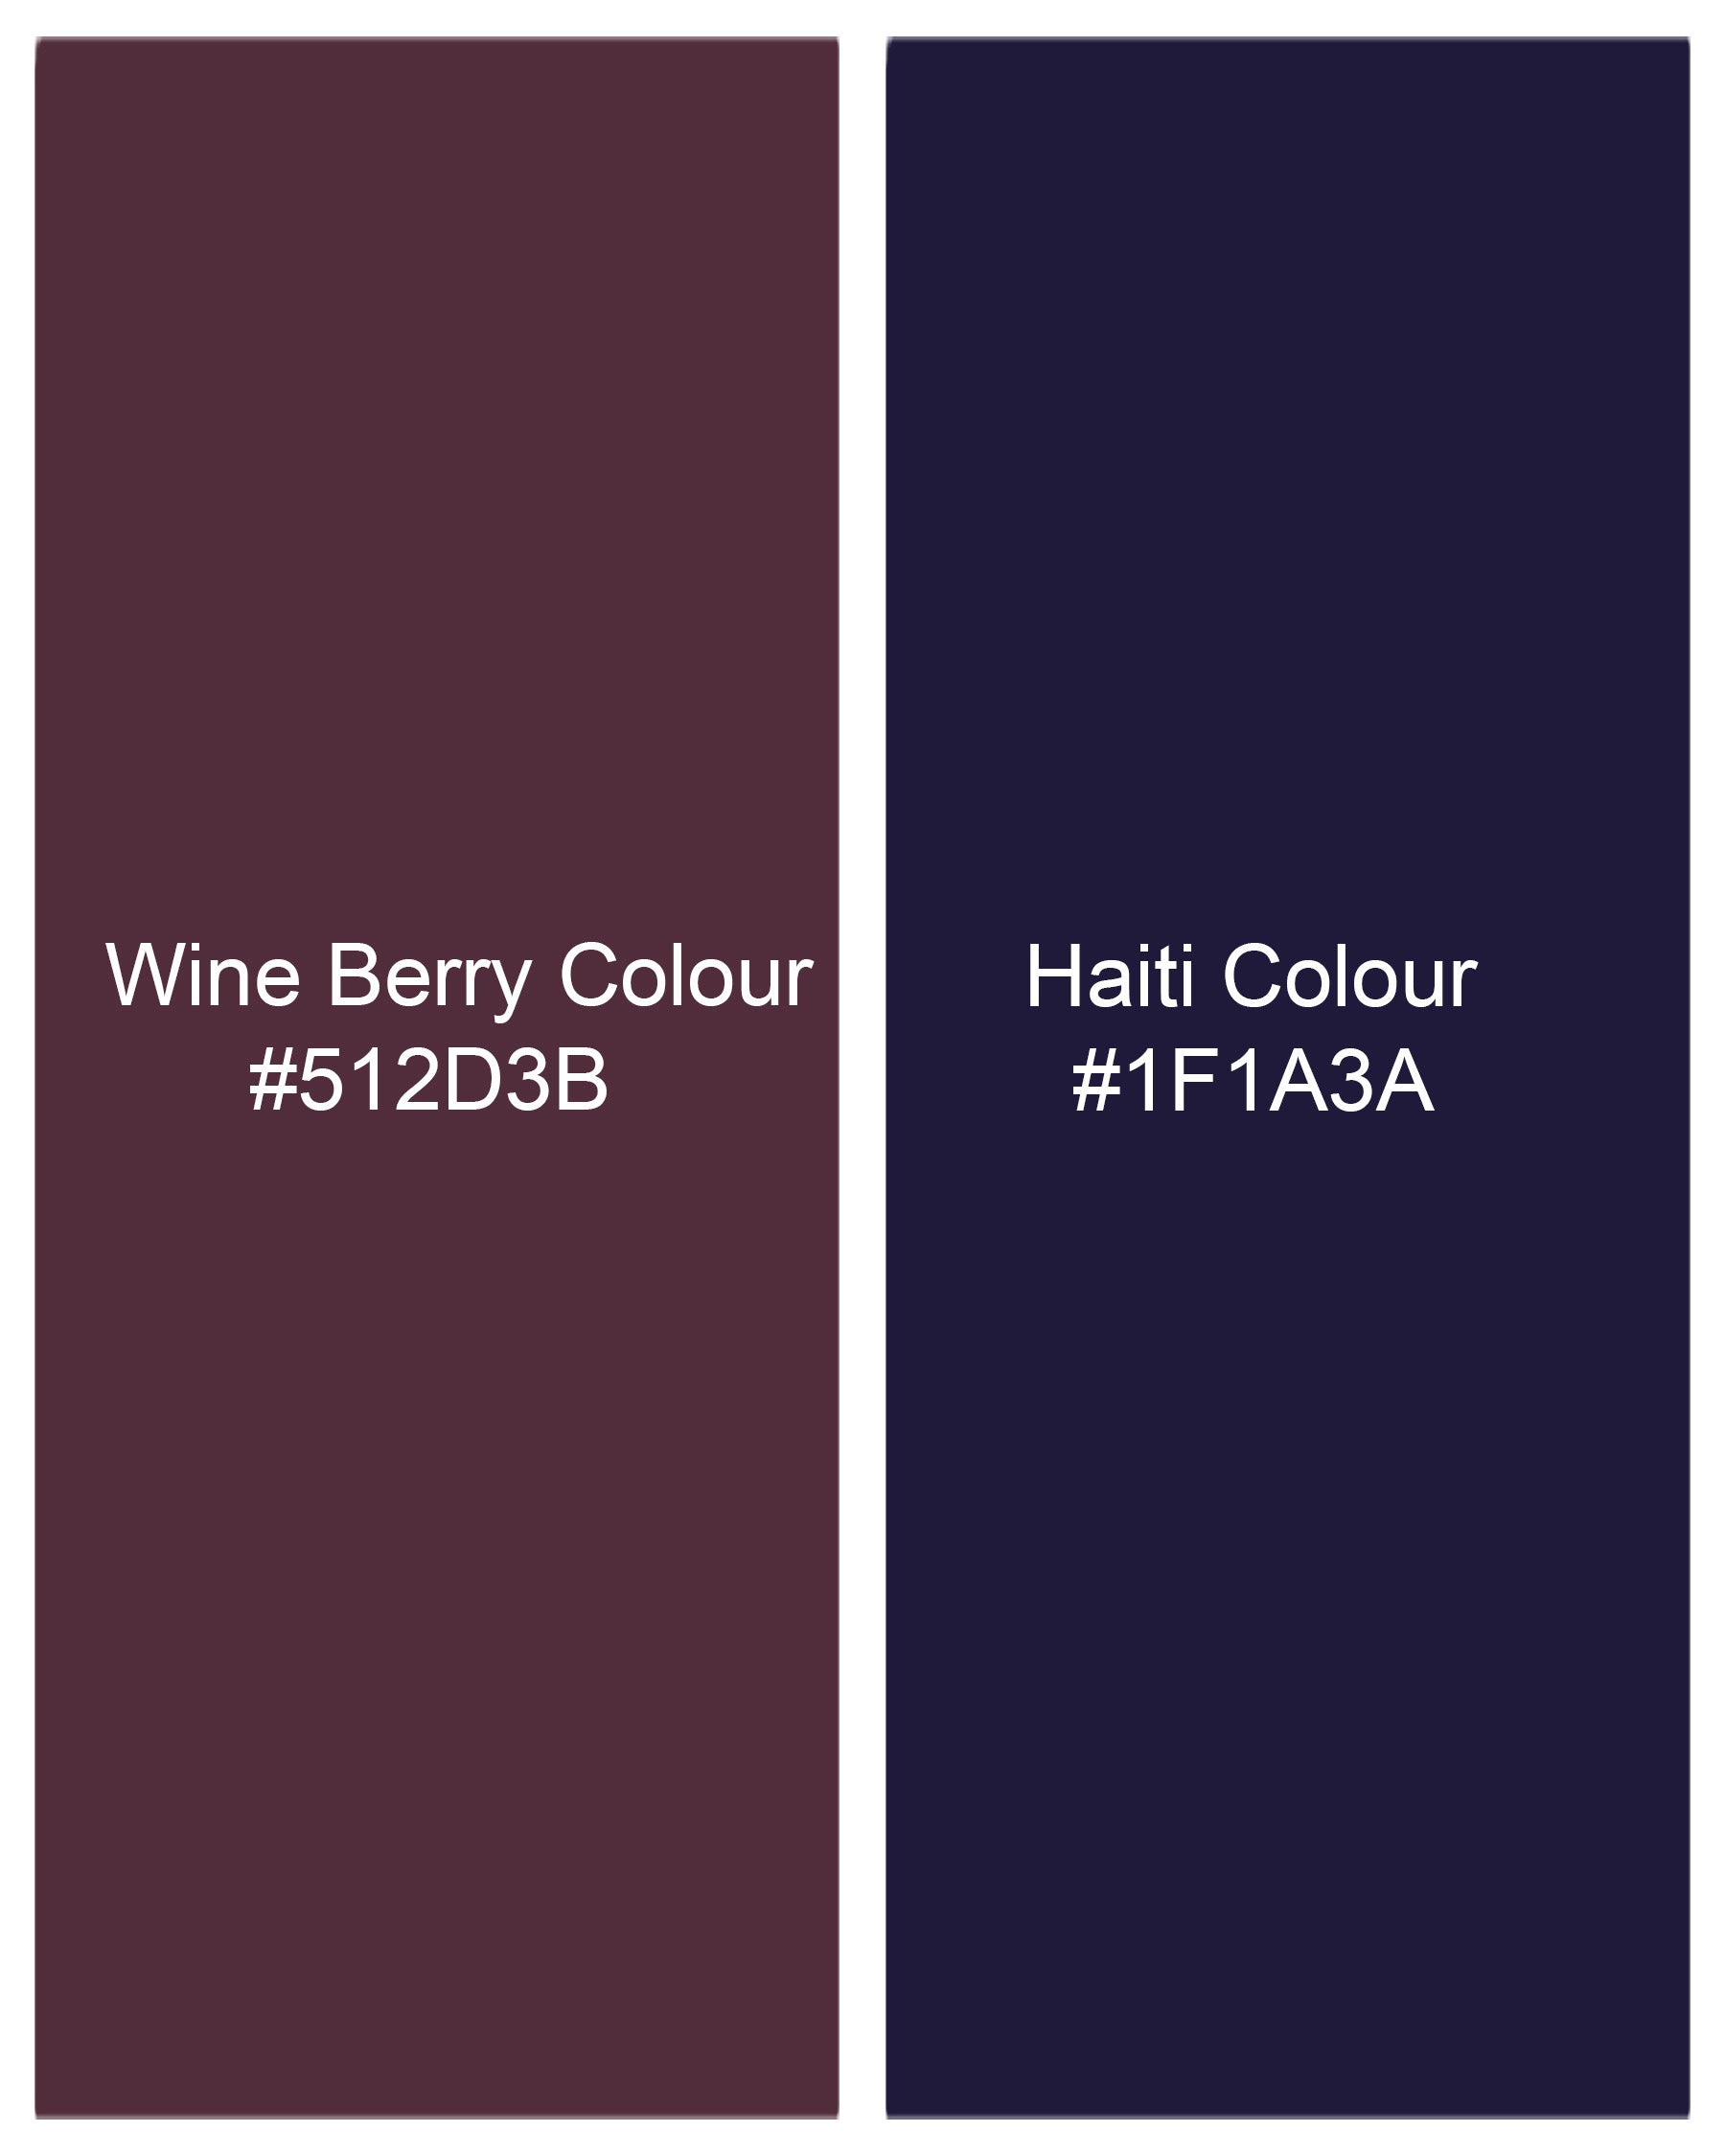 Wine Berry With Haiti Blue Nehru Jacket WC2030-36, WC2030-38, WC2030-40, WC2030-42, WC2030-44, WC2030-46, WC2030-48, WC2030-50, WC2030-52, WC2030-54, WC2030-56, WC2030-58, WC2030-60